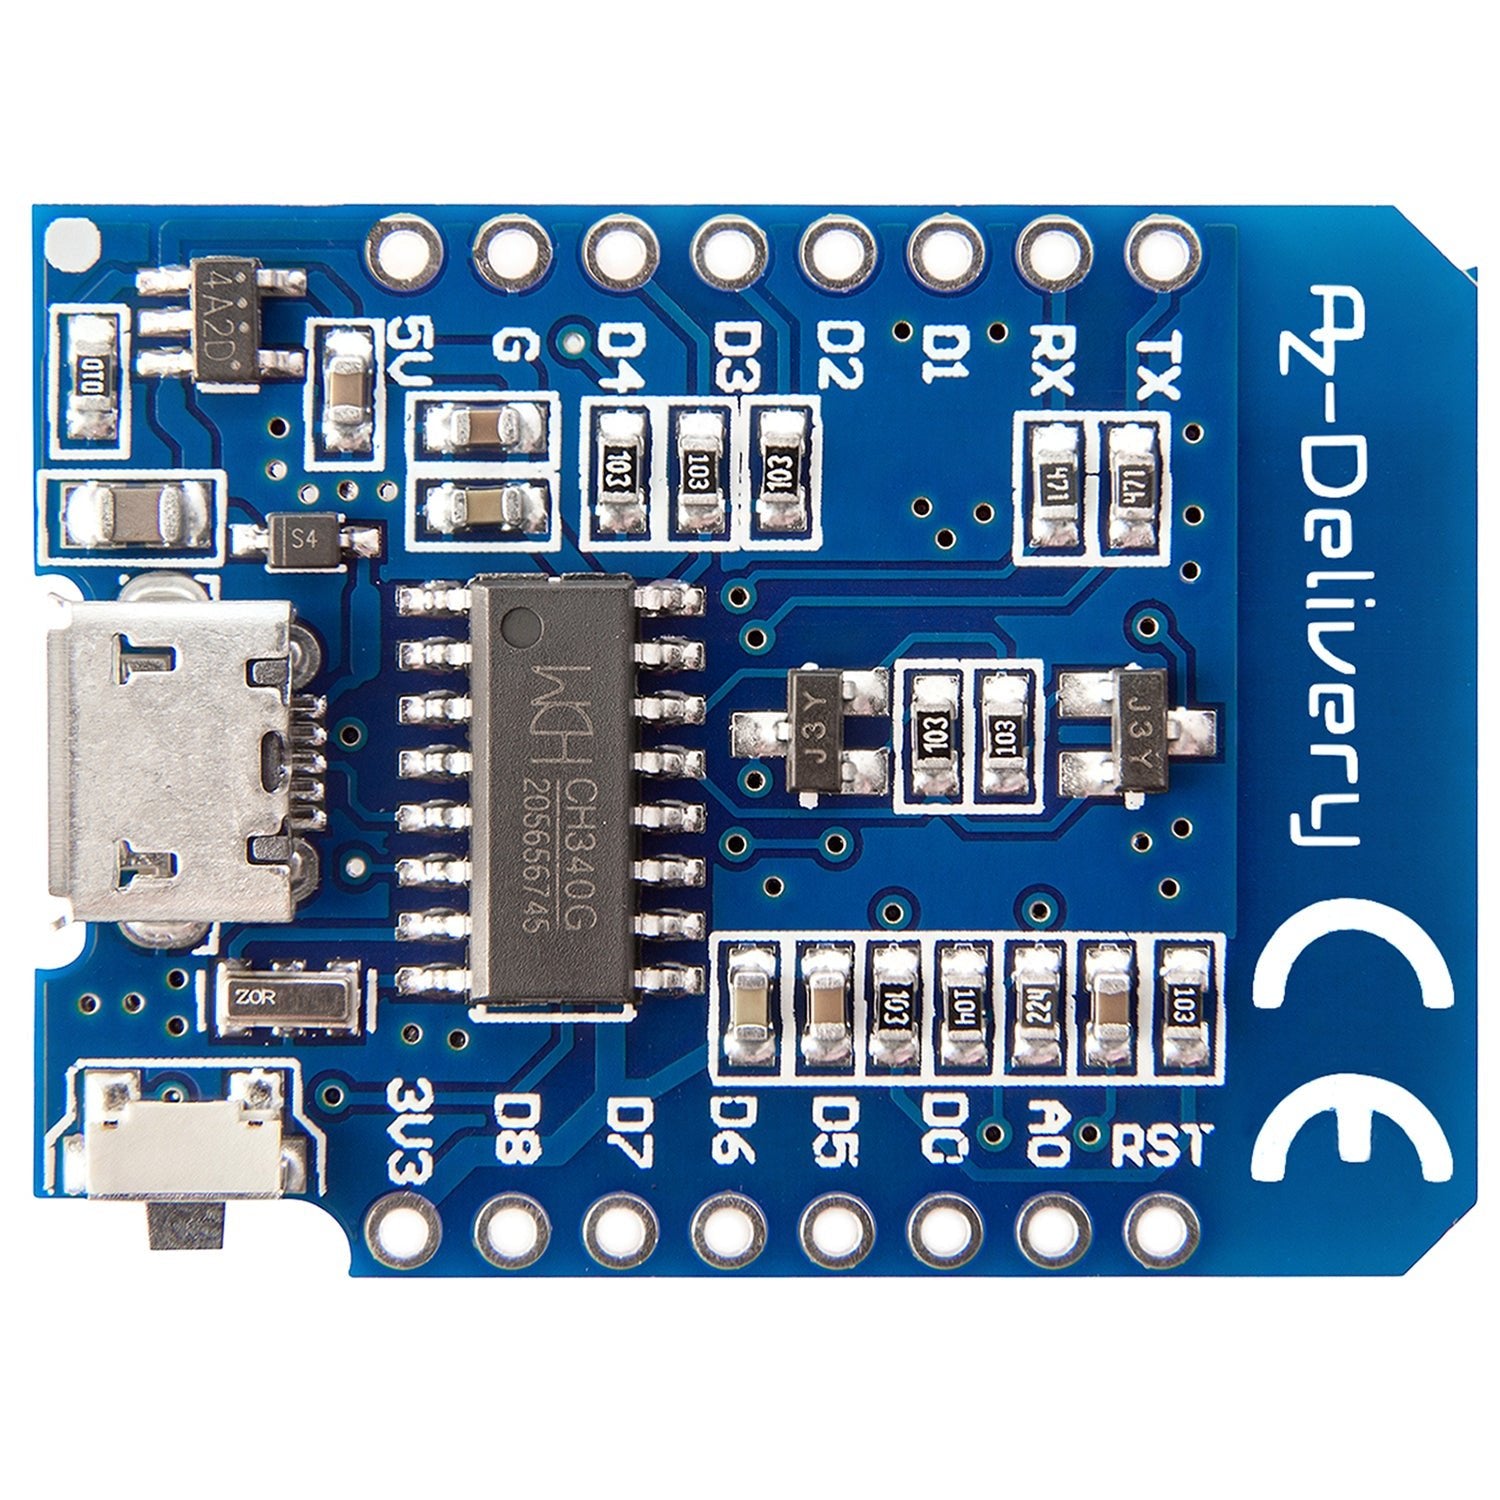 D1 Mini Nodemcu with ESP8266-12F WLAN module compatible with Arduino